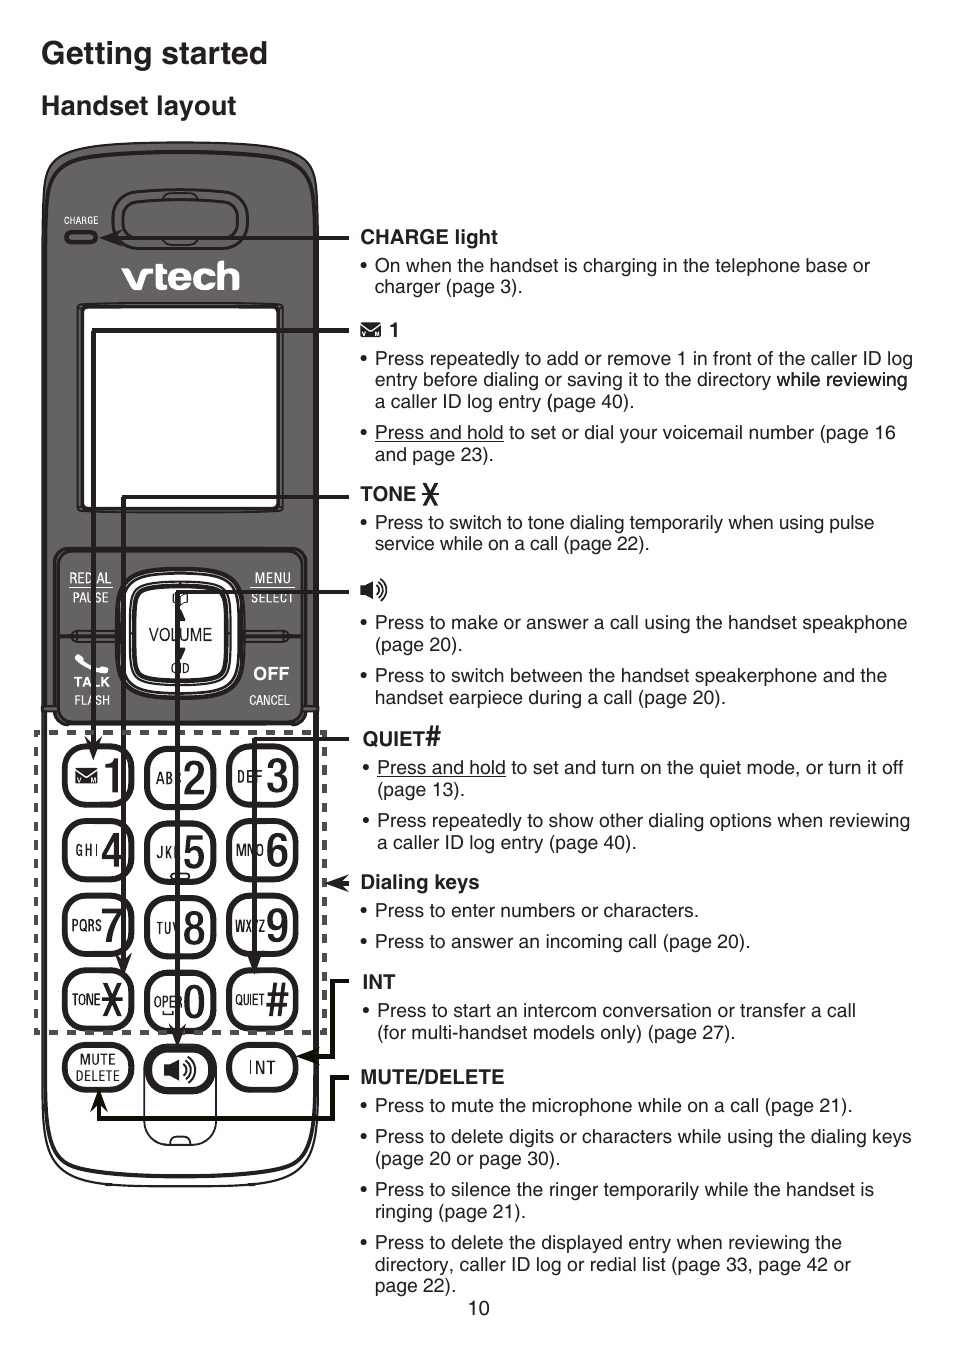 Getting started, Handset layout | VTech CS6829 Manual User Manual